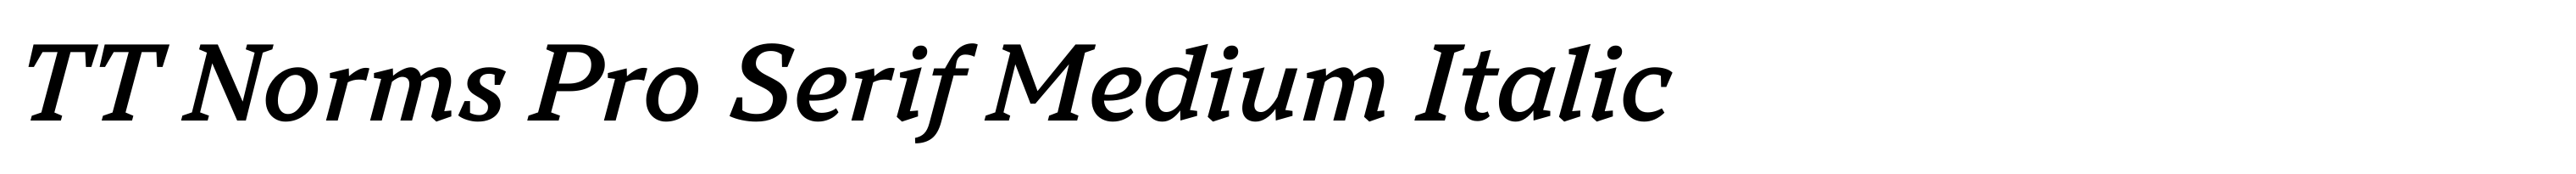 TT Norms Pro Serif Medium Italic